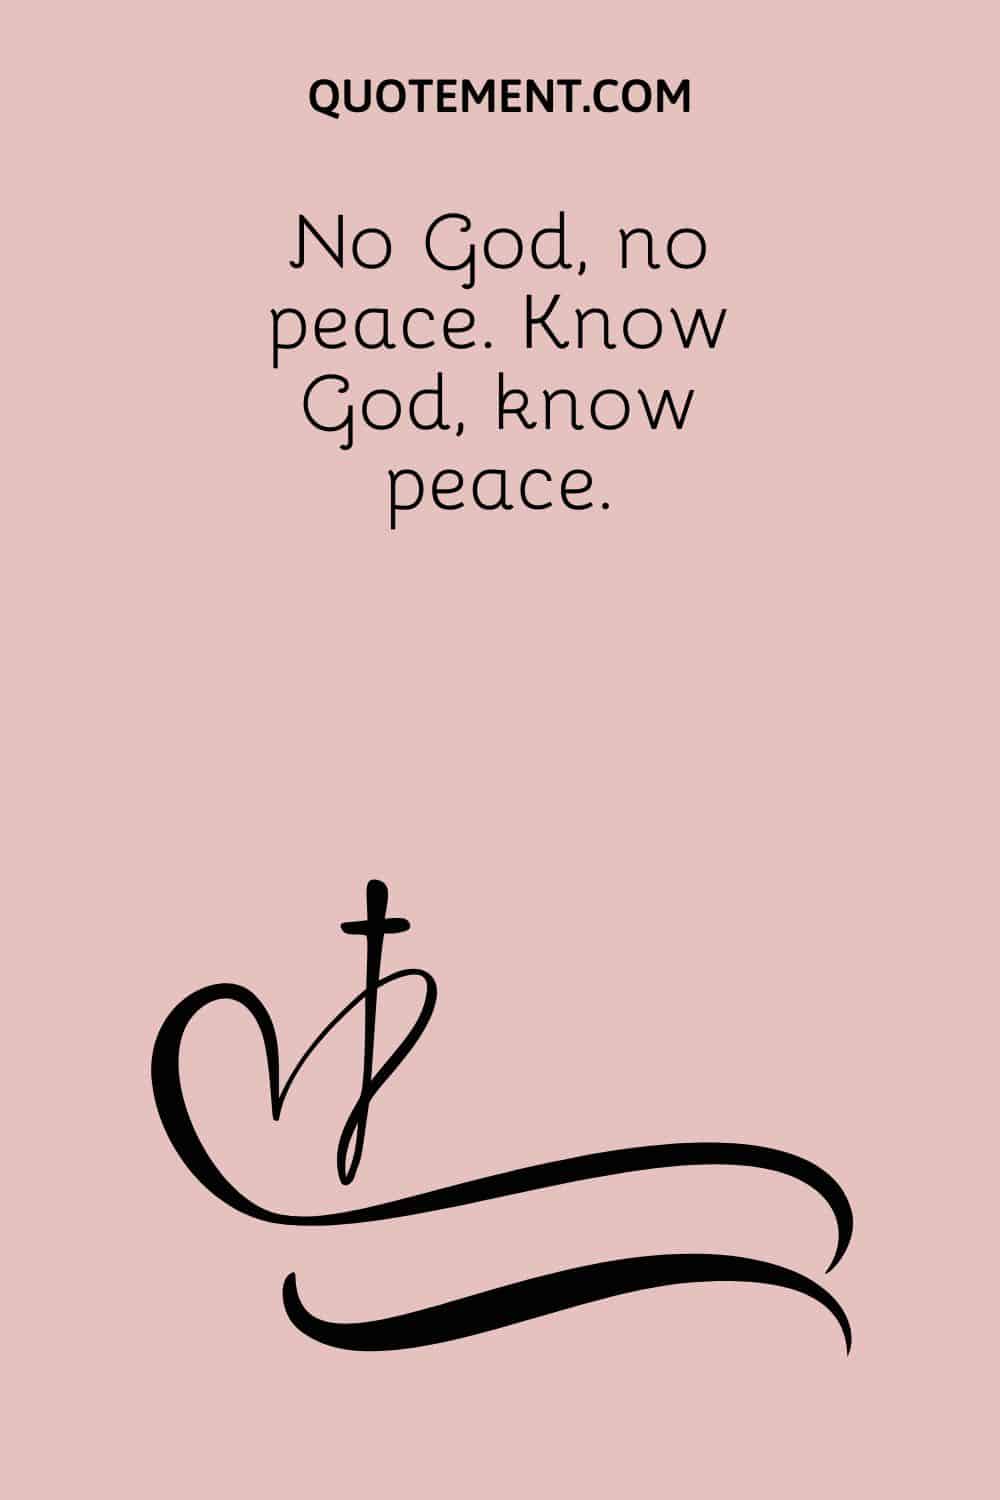 No God, no peace. Know God, know peace